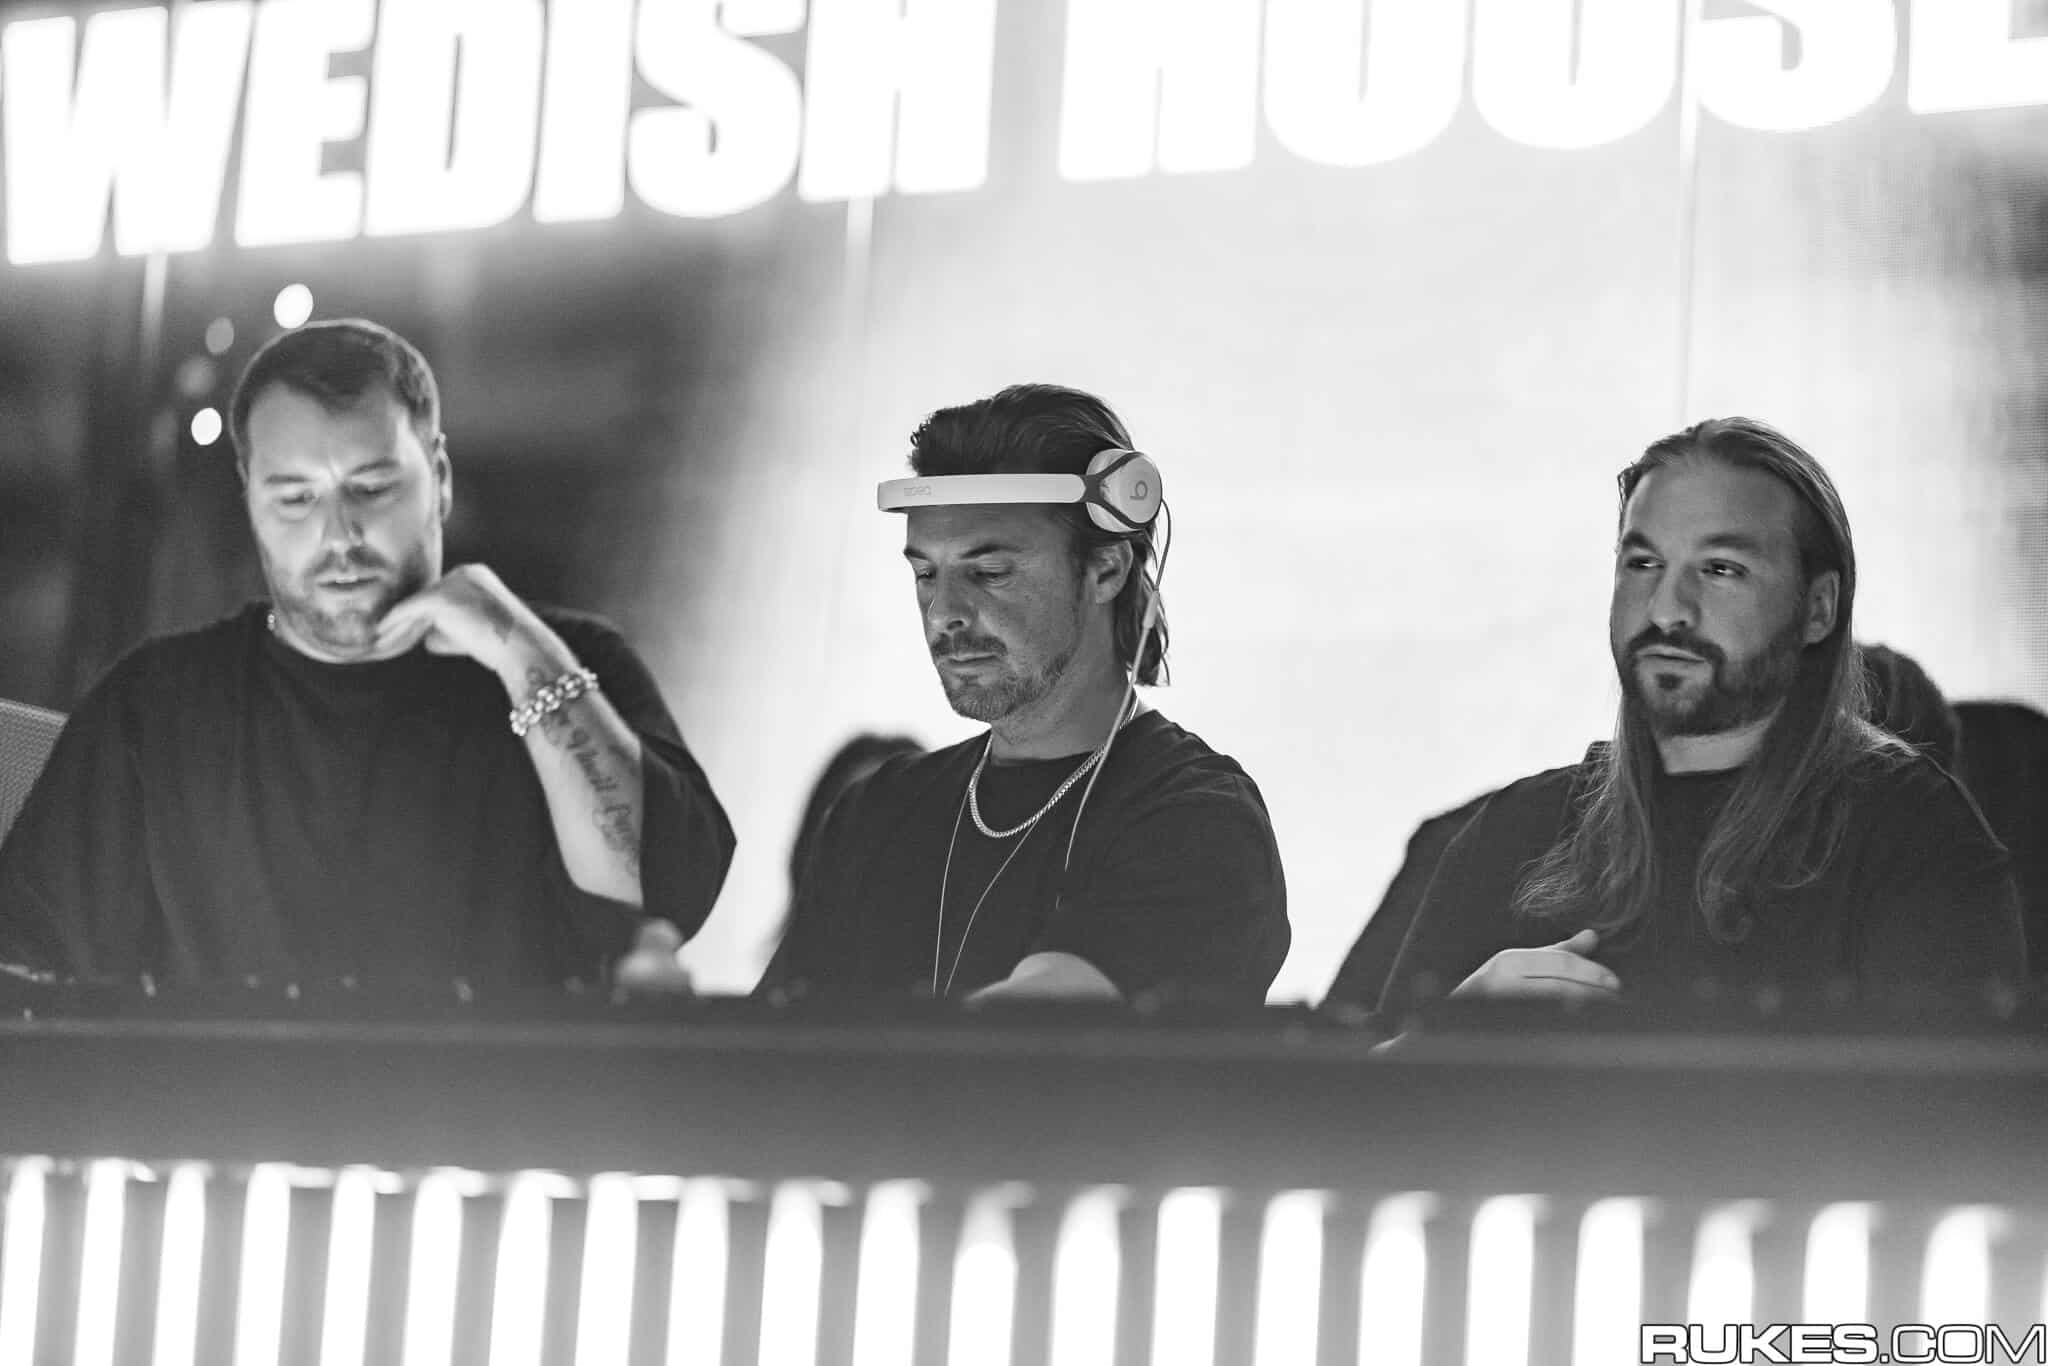 Swedish House Mafia brings alternate mix to ‘Heaven Takes You Home’: Listen